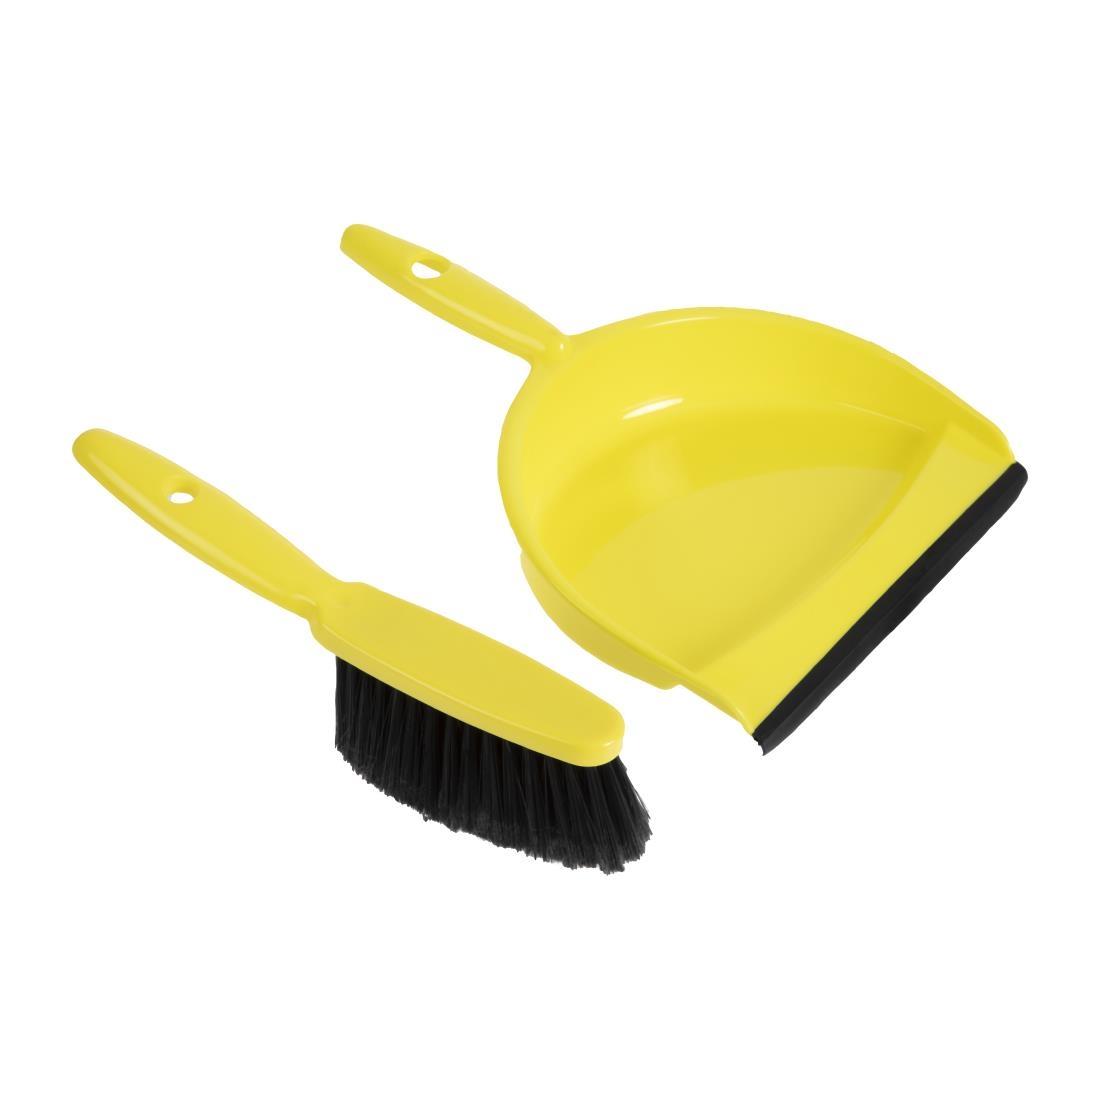 Jantex Soft Dustpan and Brush Set Yellow - CC930  - 3